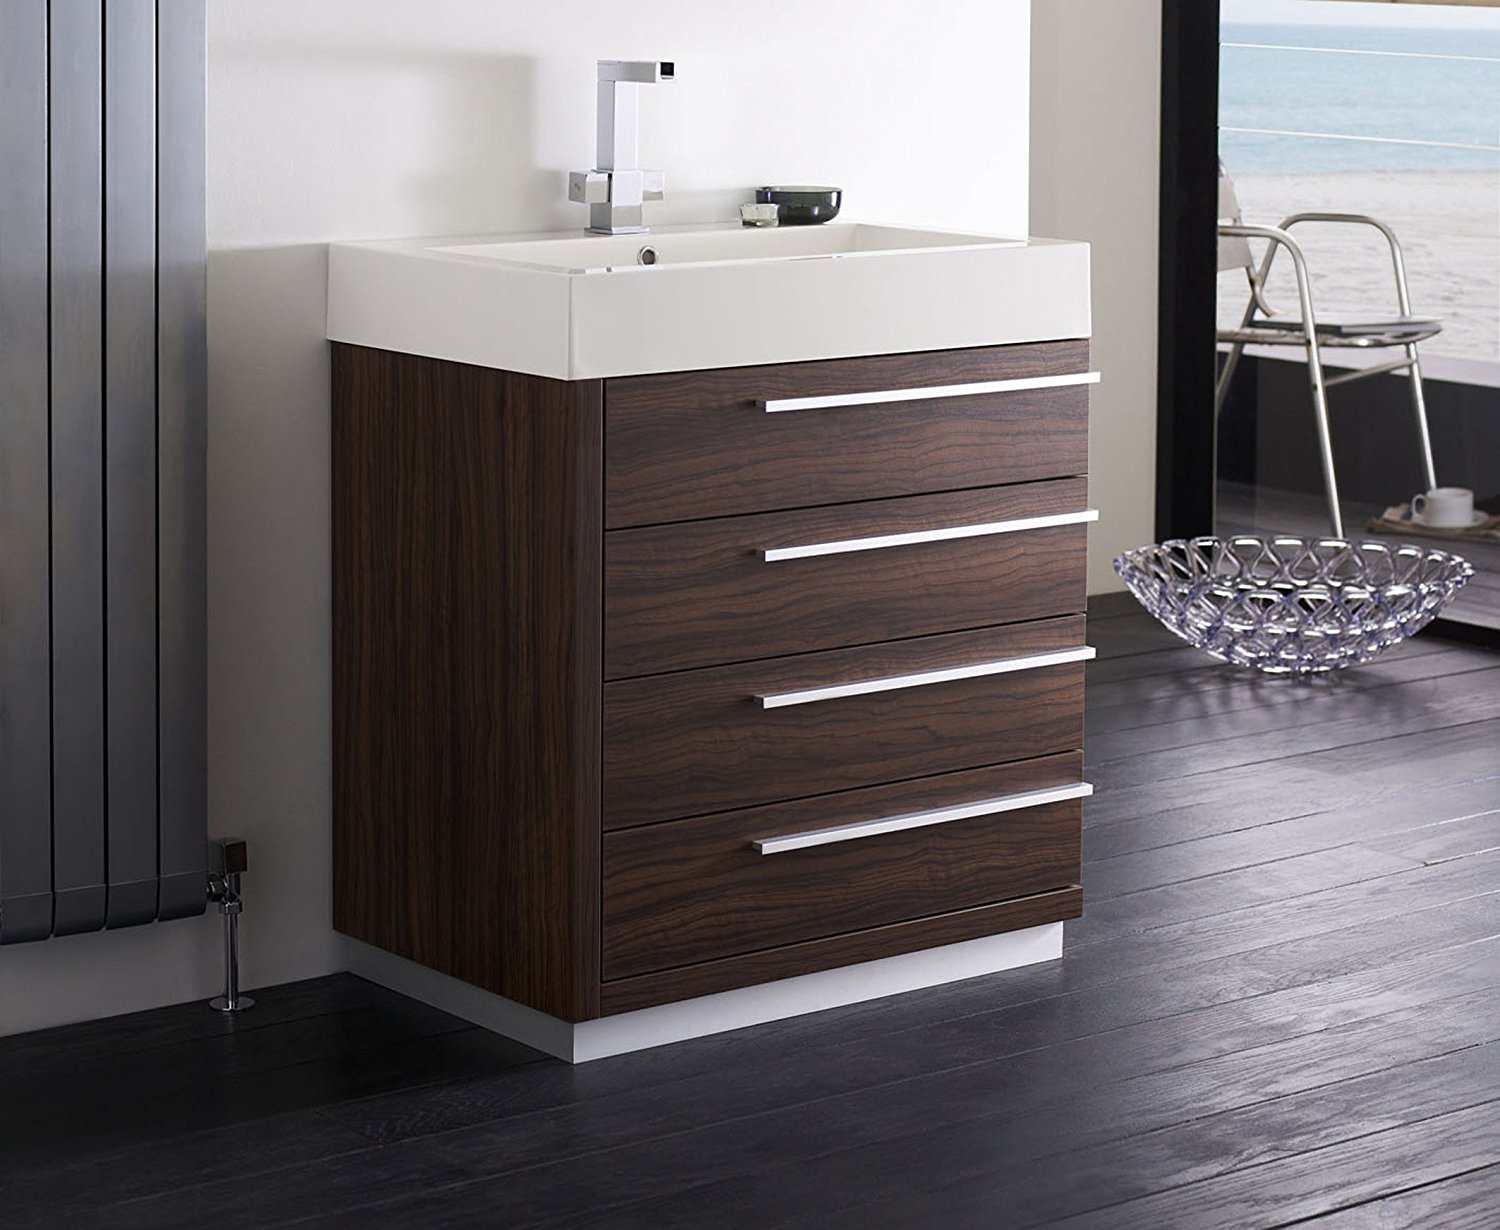 Floor Standing Bathroom Vanity Units - brandnew-furniture